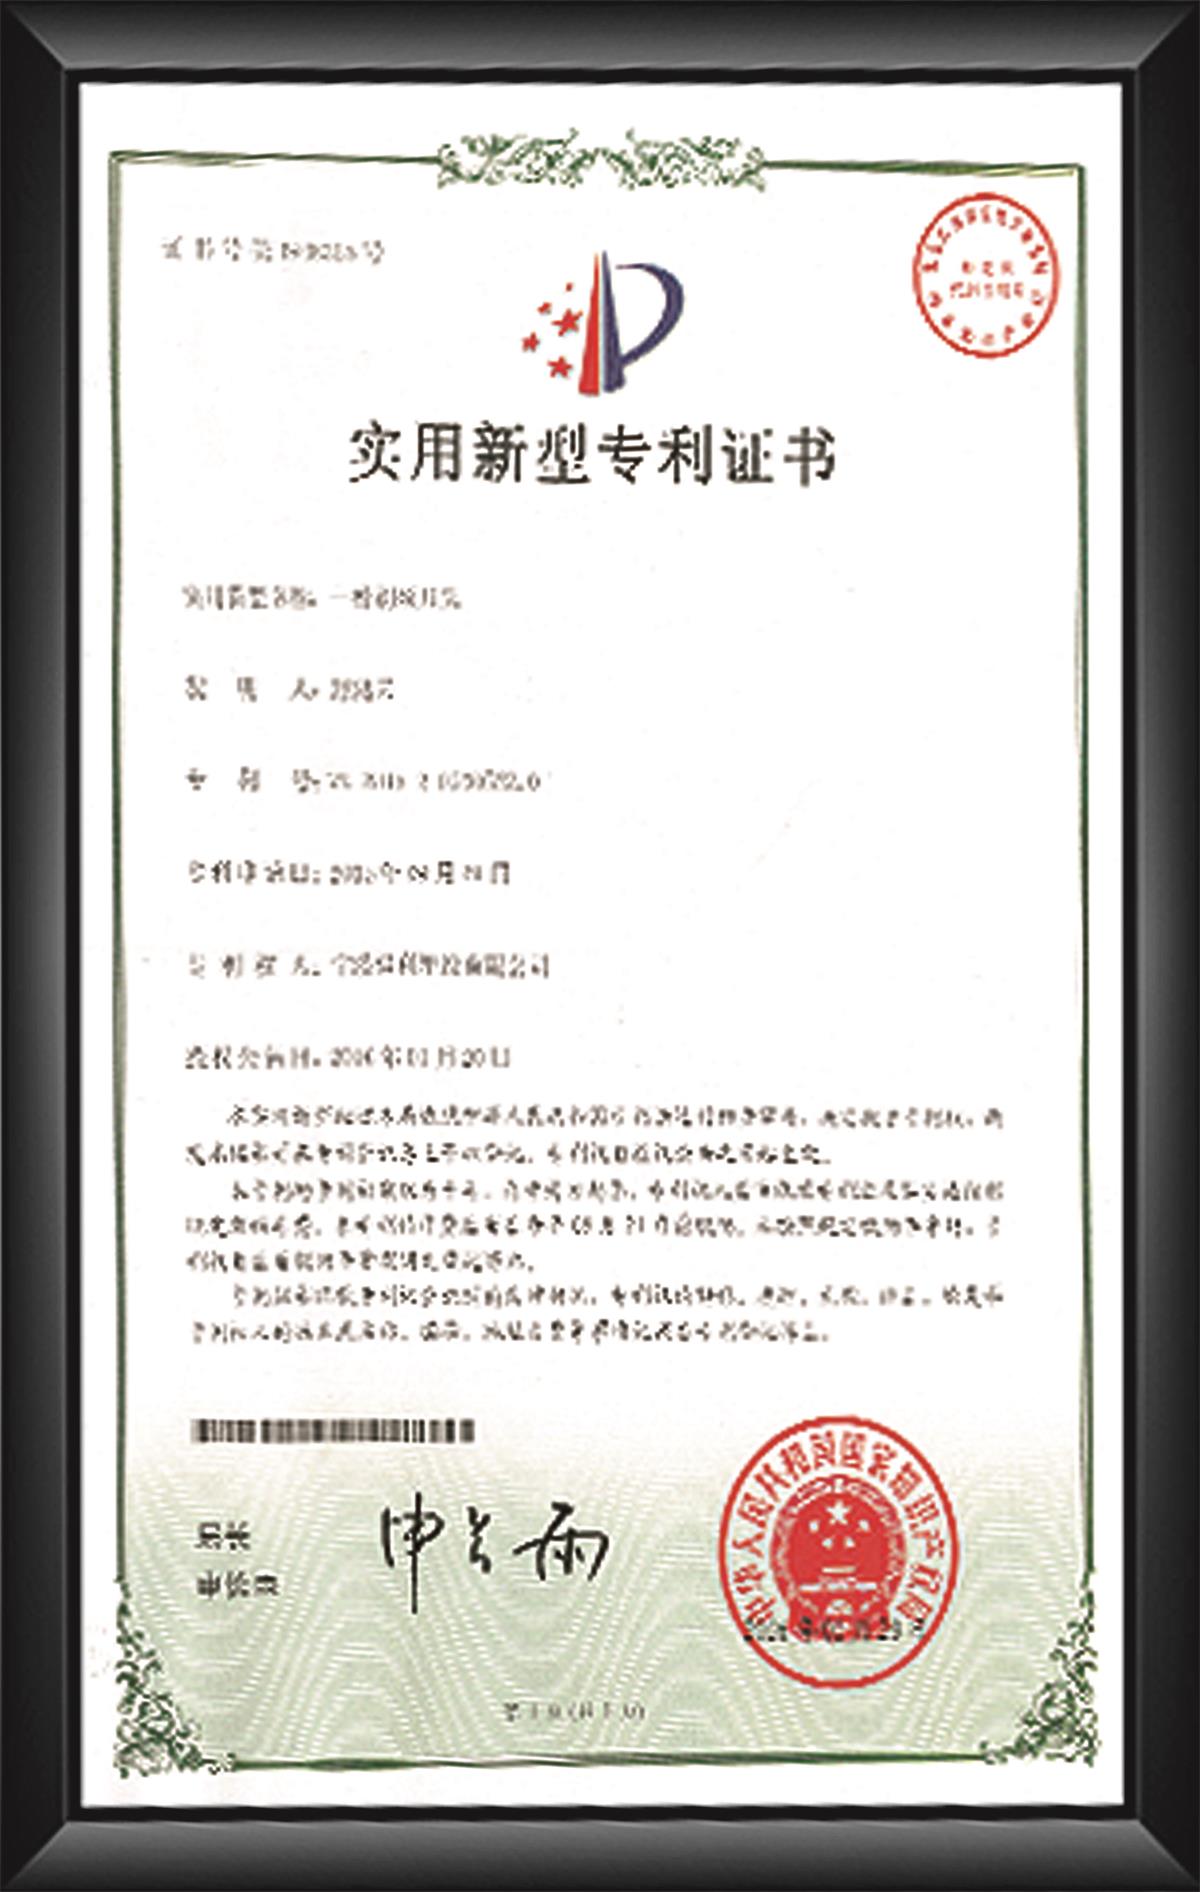 Certificat de brevet de utilitate